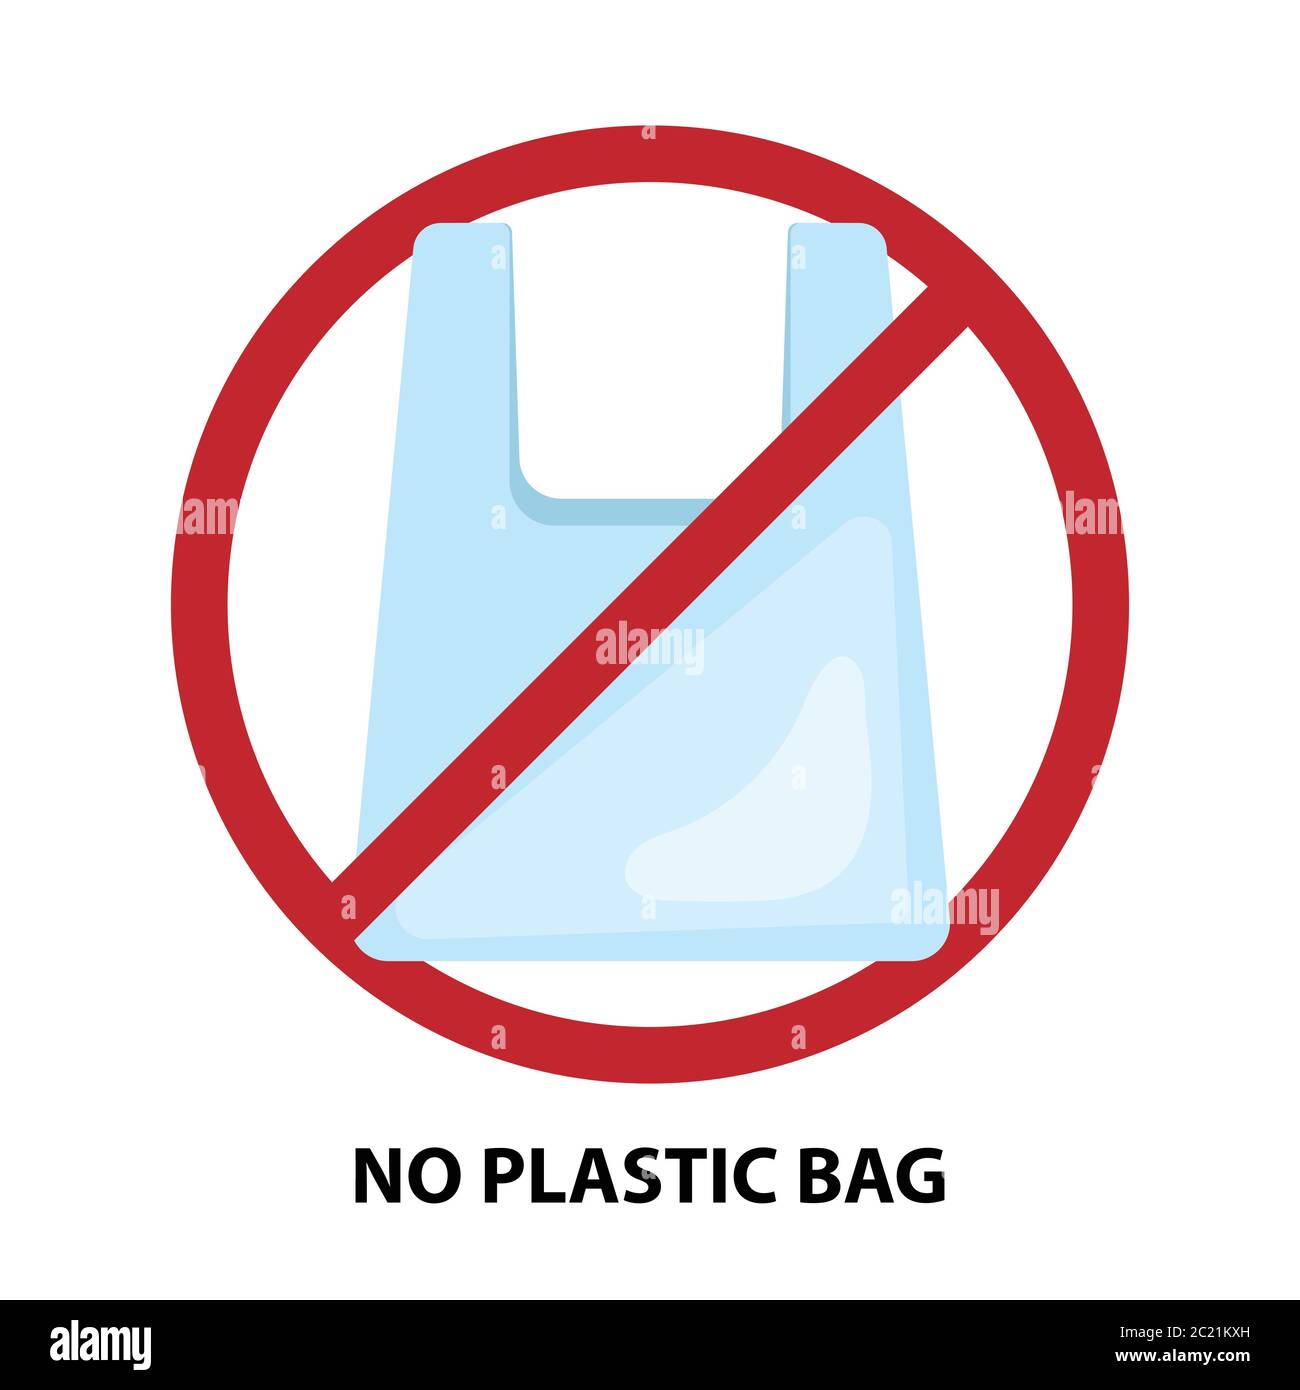 No plastic bag slogan, vector illustration Stock Vector Image & Art - Alamy